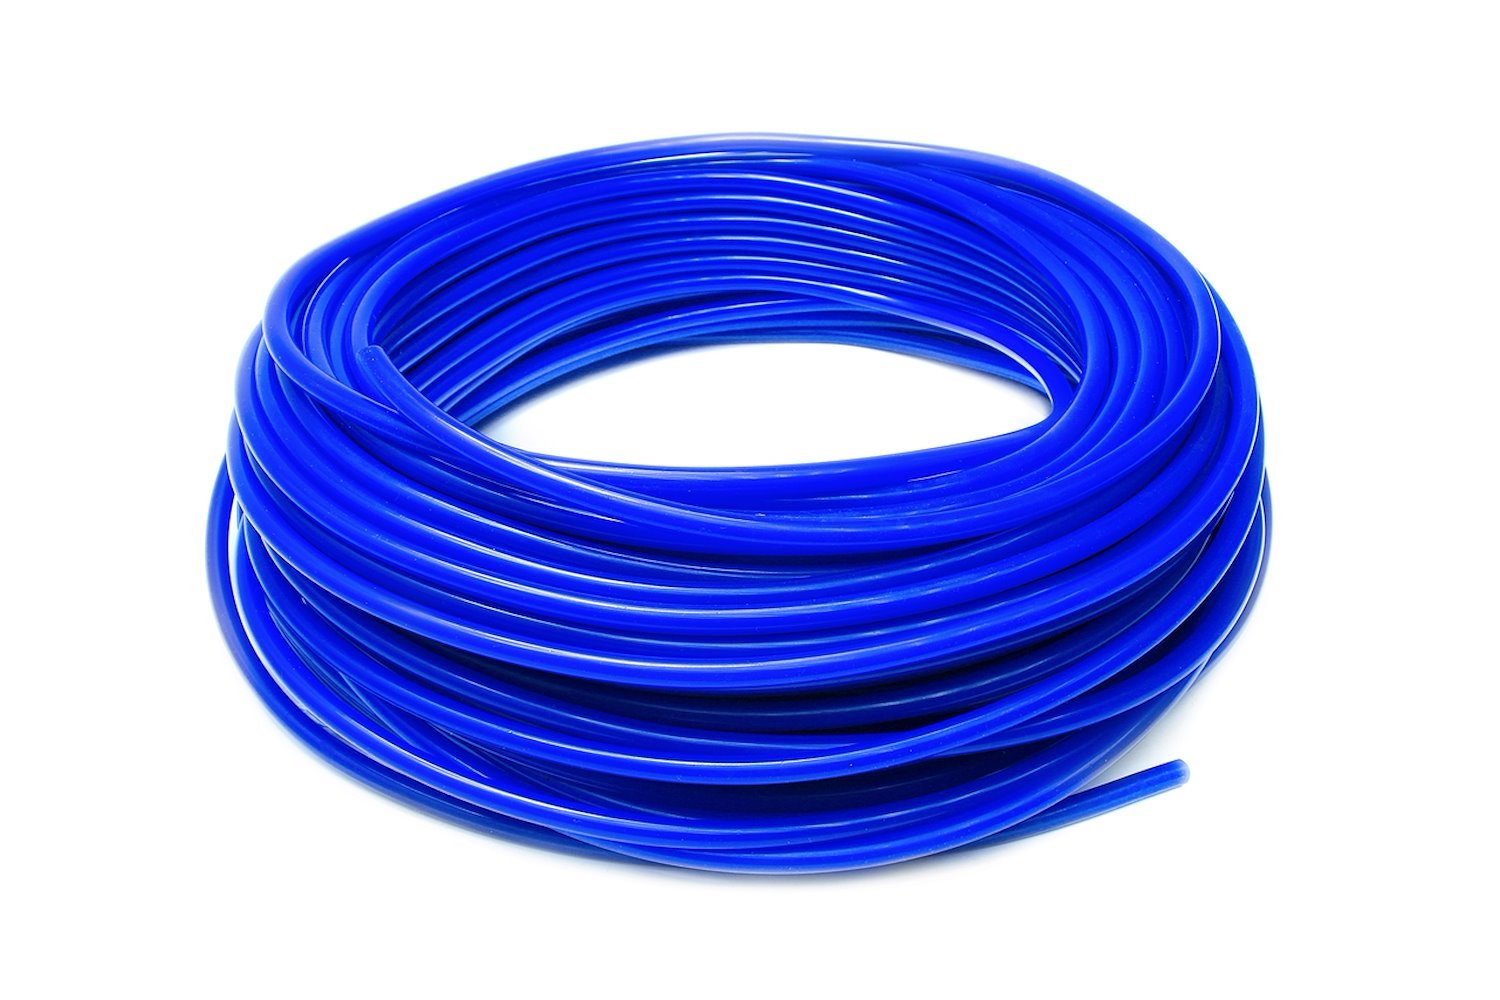 HTSVH4-BLUEx50 High-Temperature Silicone Vacuum Hose Tubing, 5/32 in. ID, 50 ft. Roll, Blue